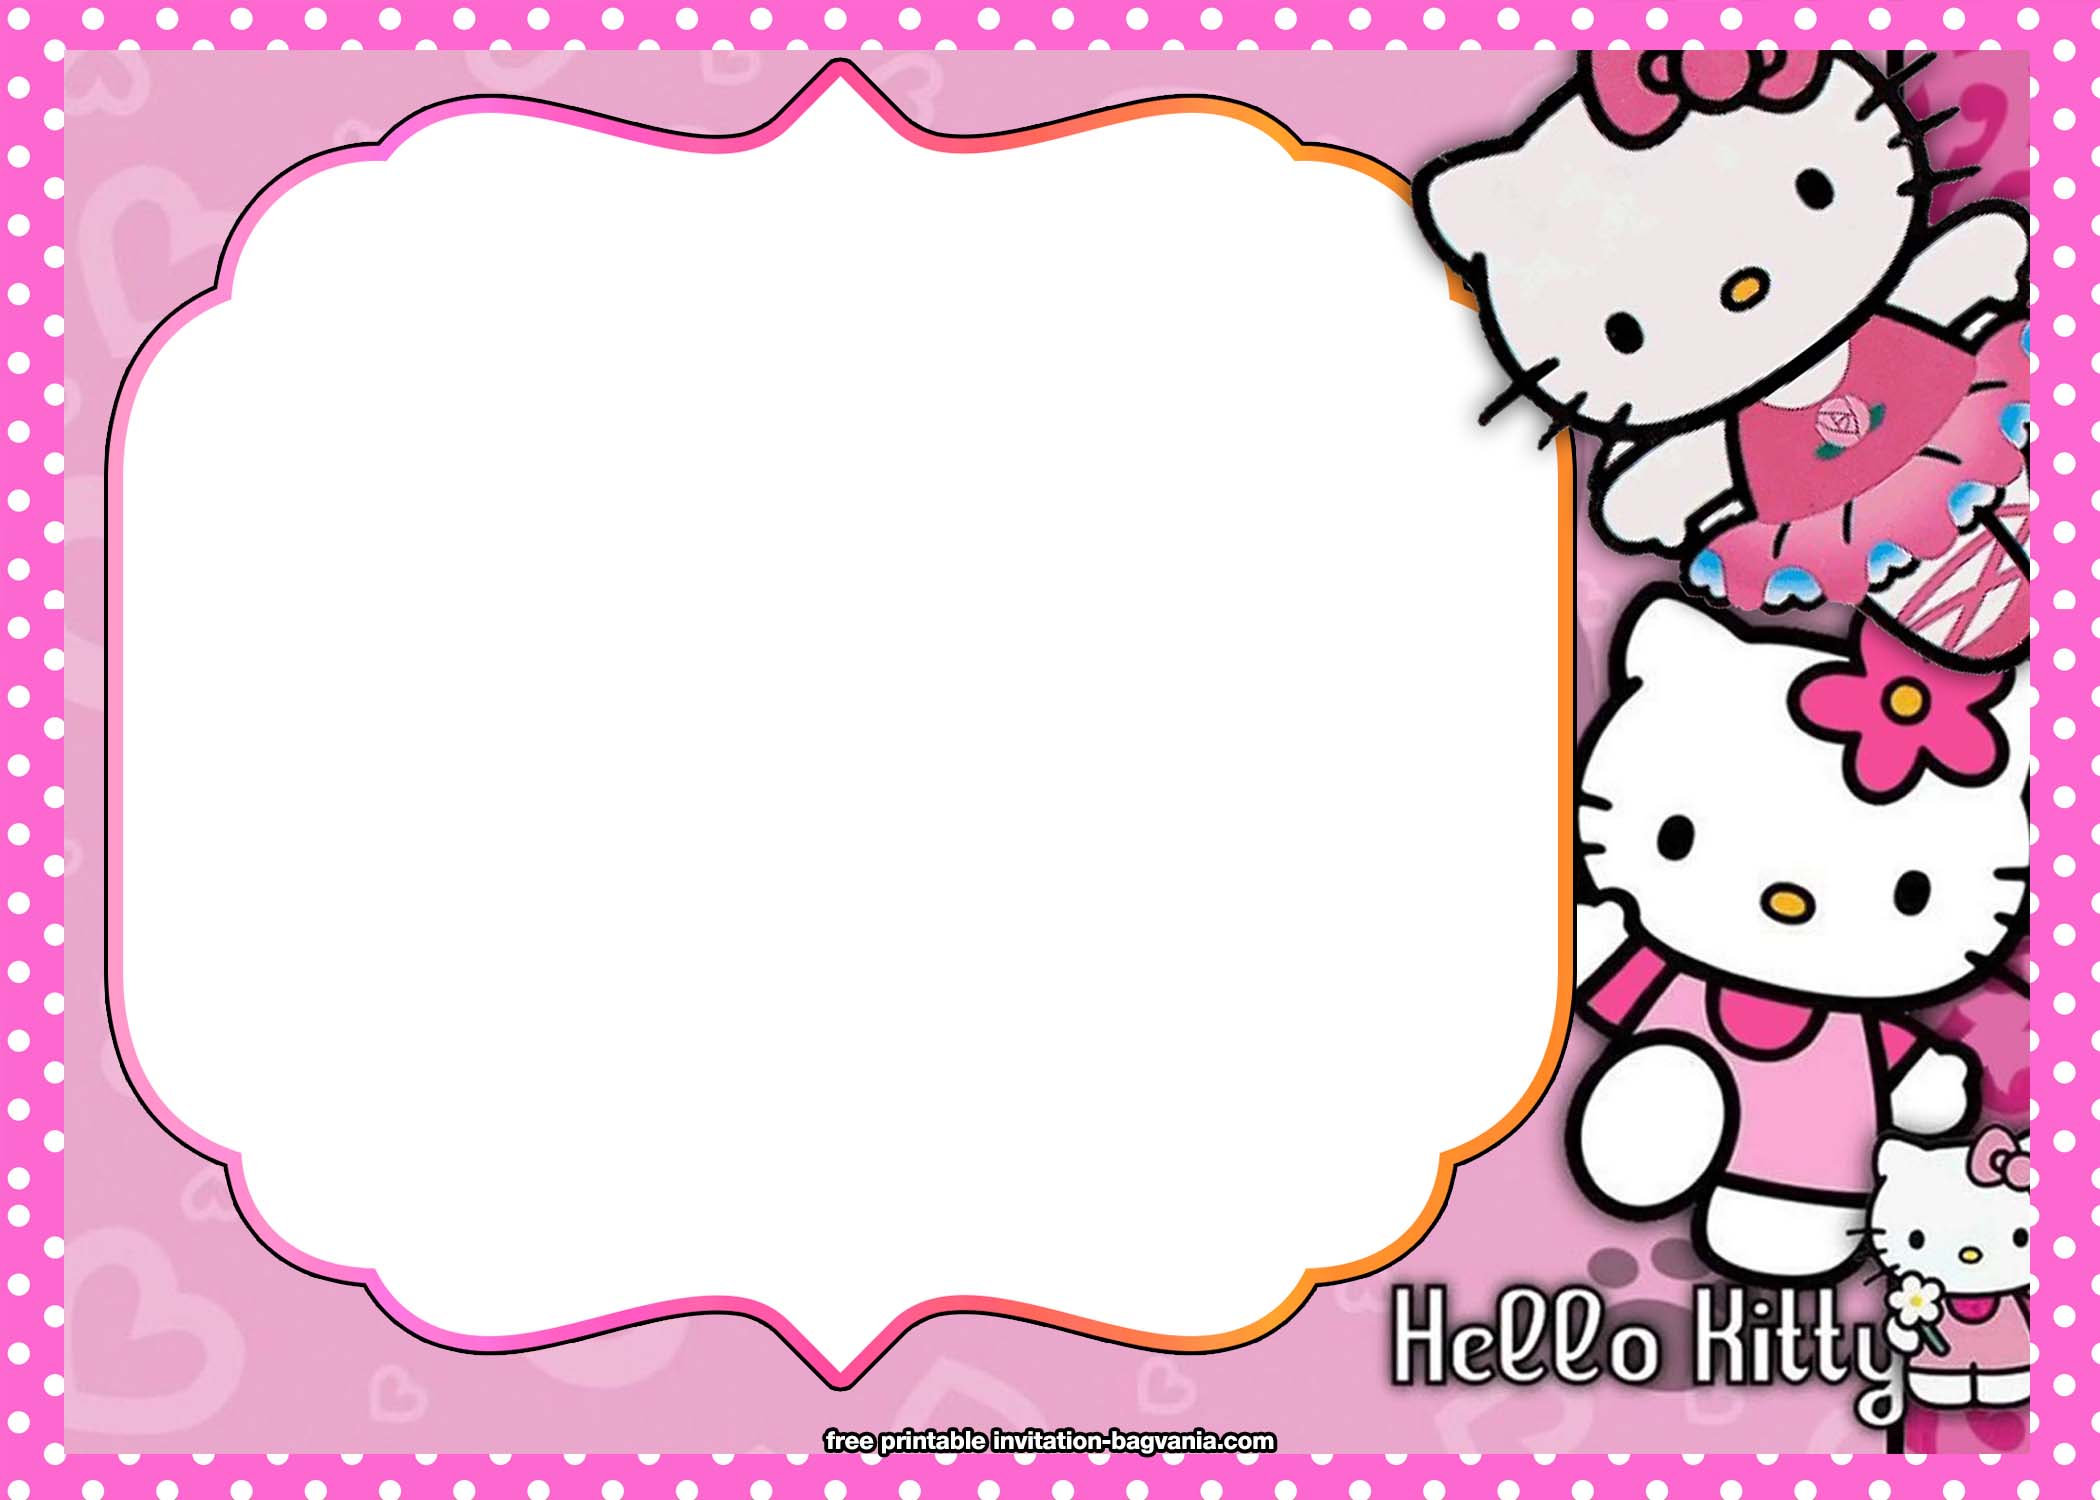 10+ FREE Personalized Hello Kitty Invitation Templates | FREE Printable